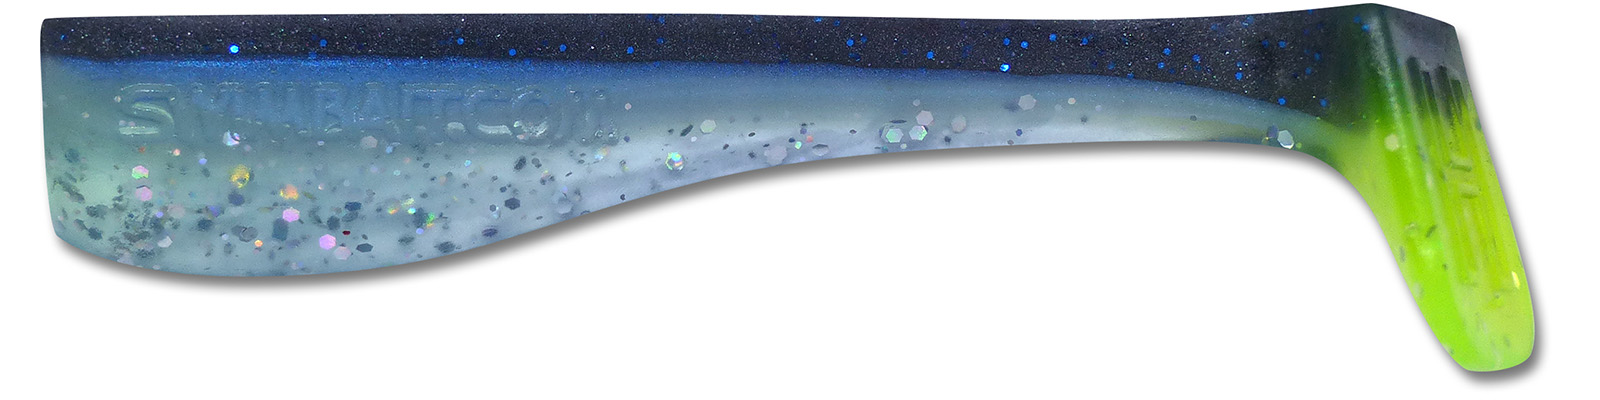 4.75 Inch White Super Glow Hammer Swim Bait – Bend It Fishing